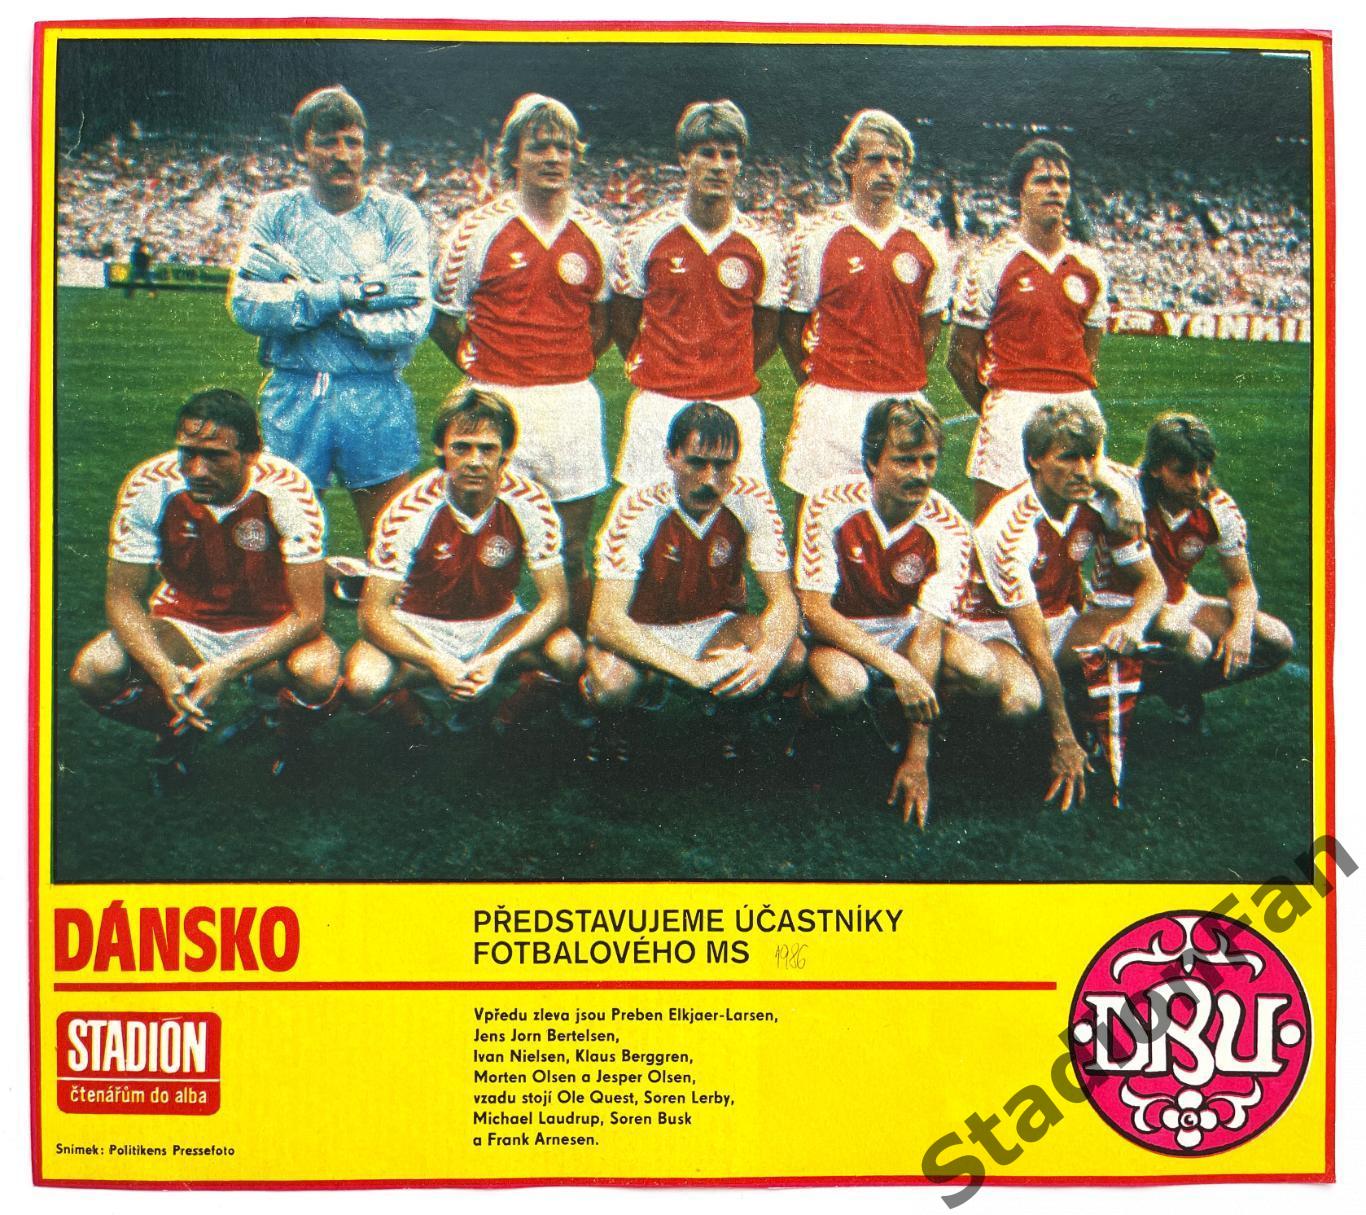 Постер из журнала Стадион (Stadion) - Dansko, 1986